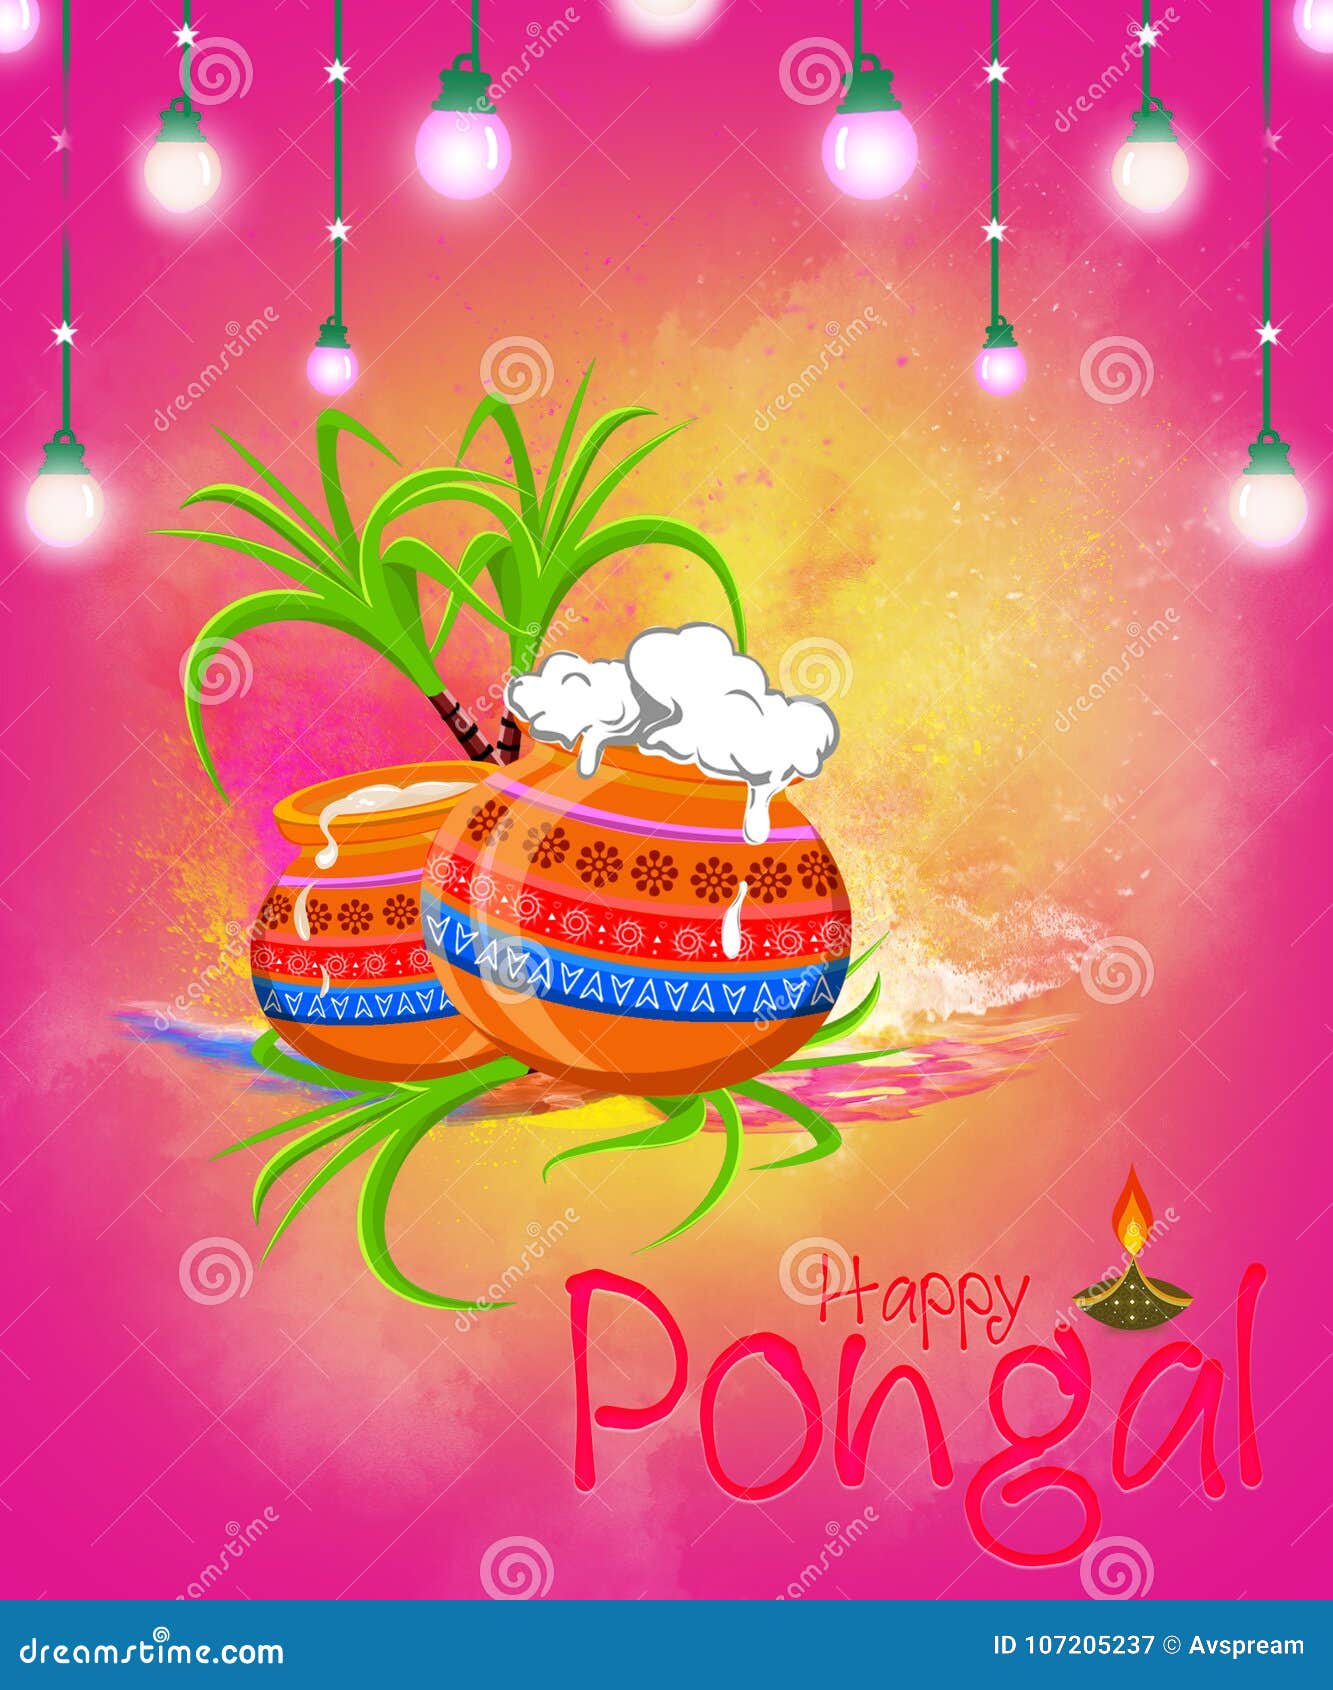 Illustration of Happy Pongal Greeting Background. Stock ...